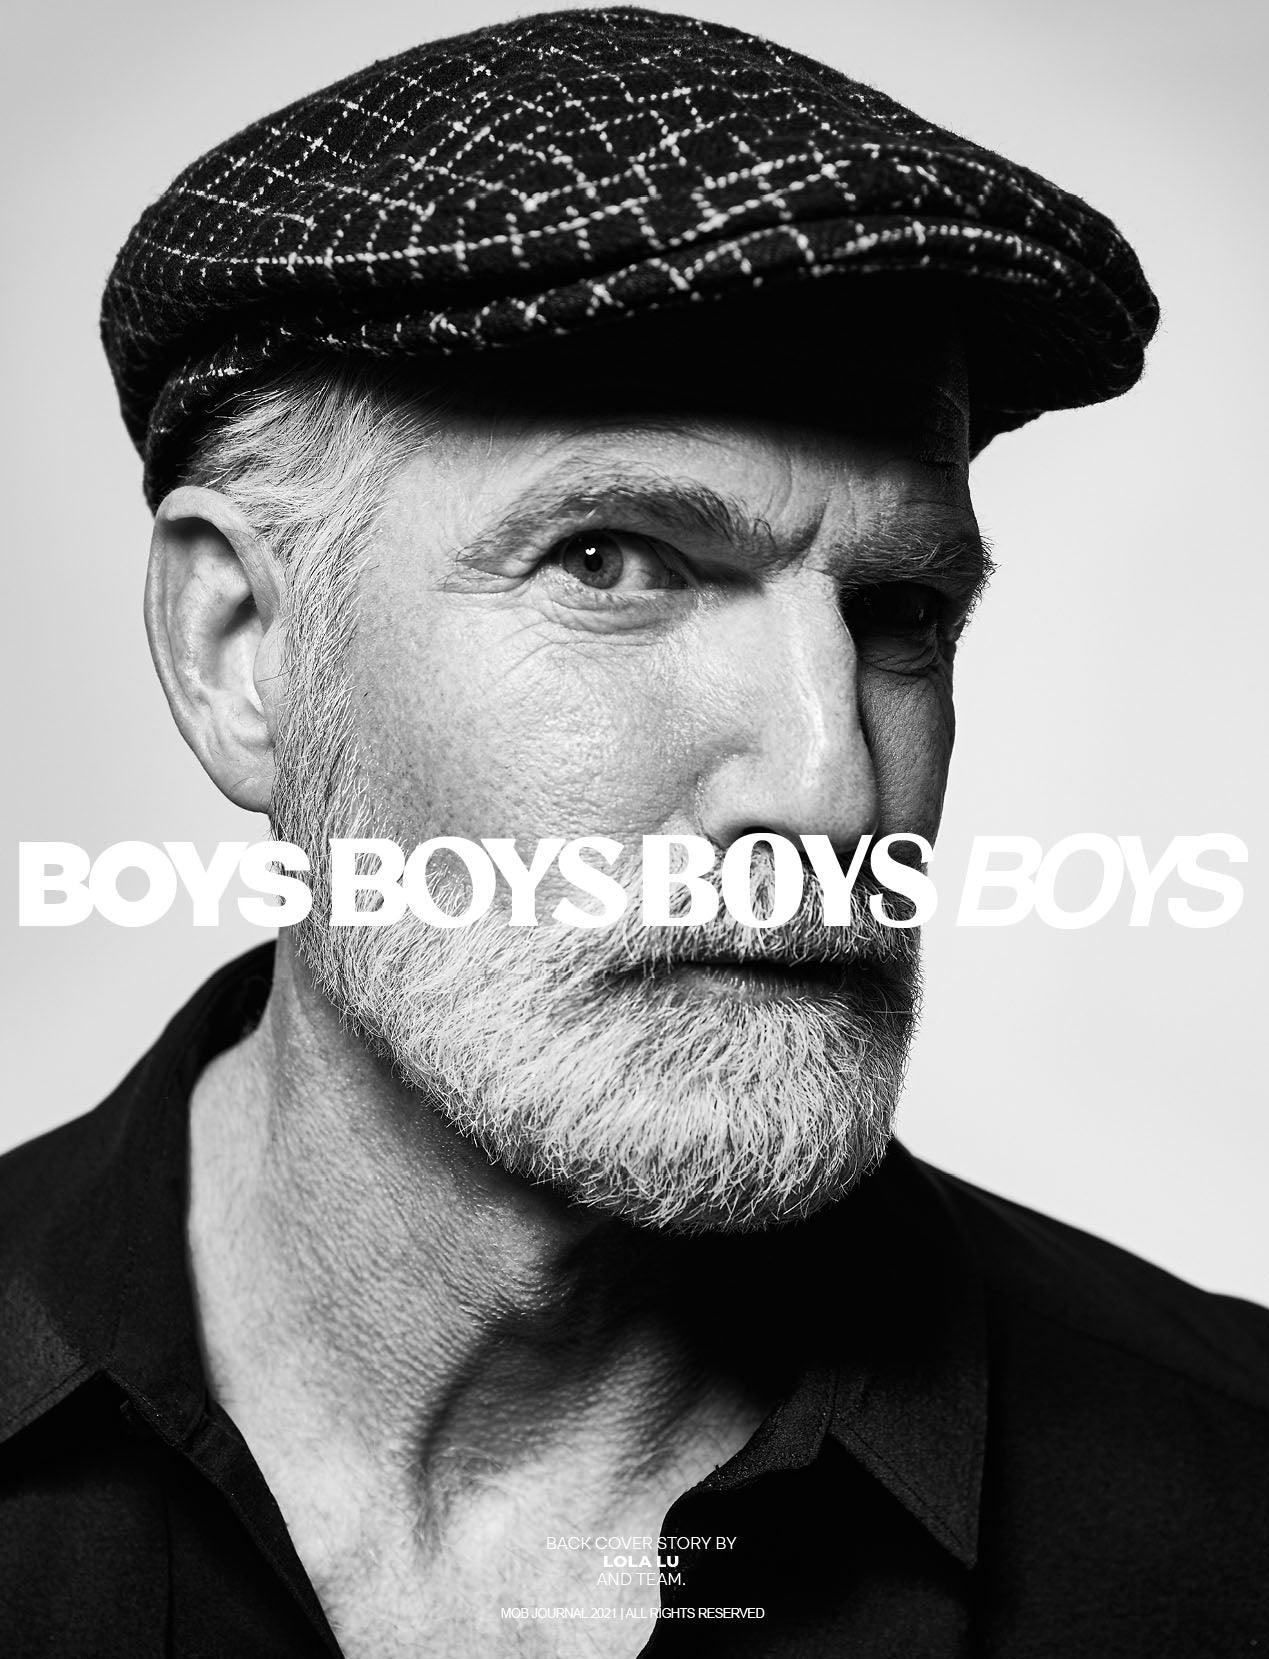 BOYS BOYS BOYS BOYS | VOLUME TEN | ISSUE #17 - Mob Journal